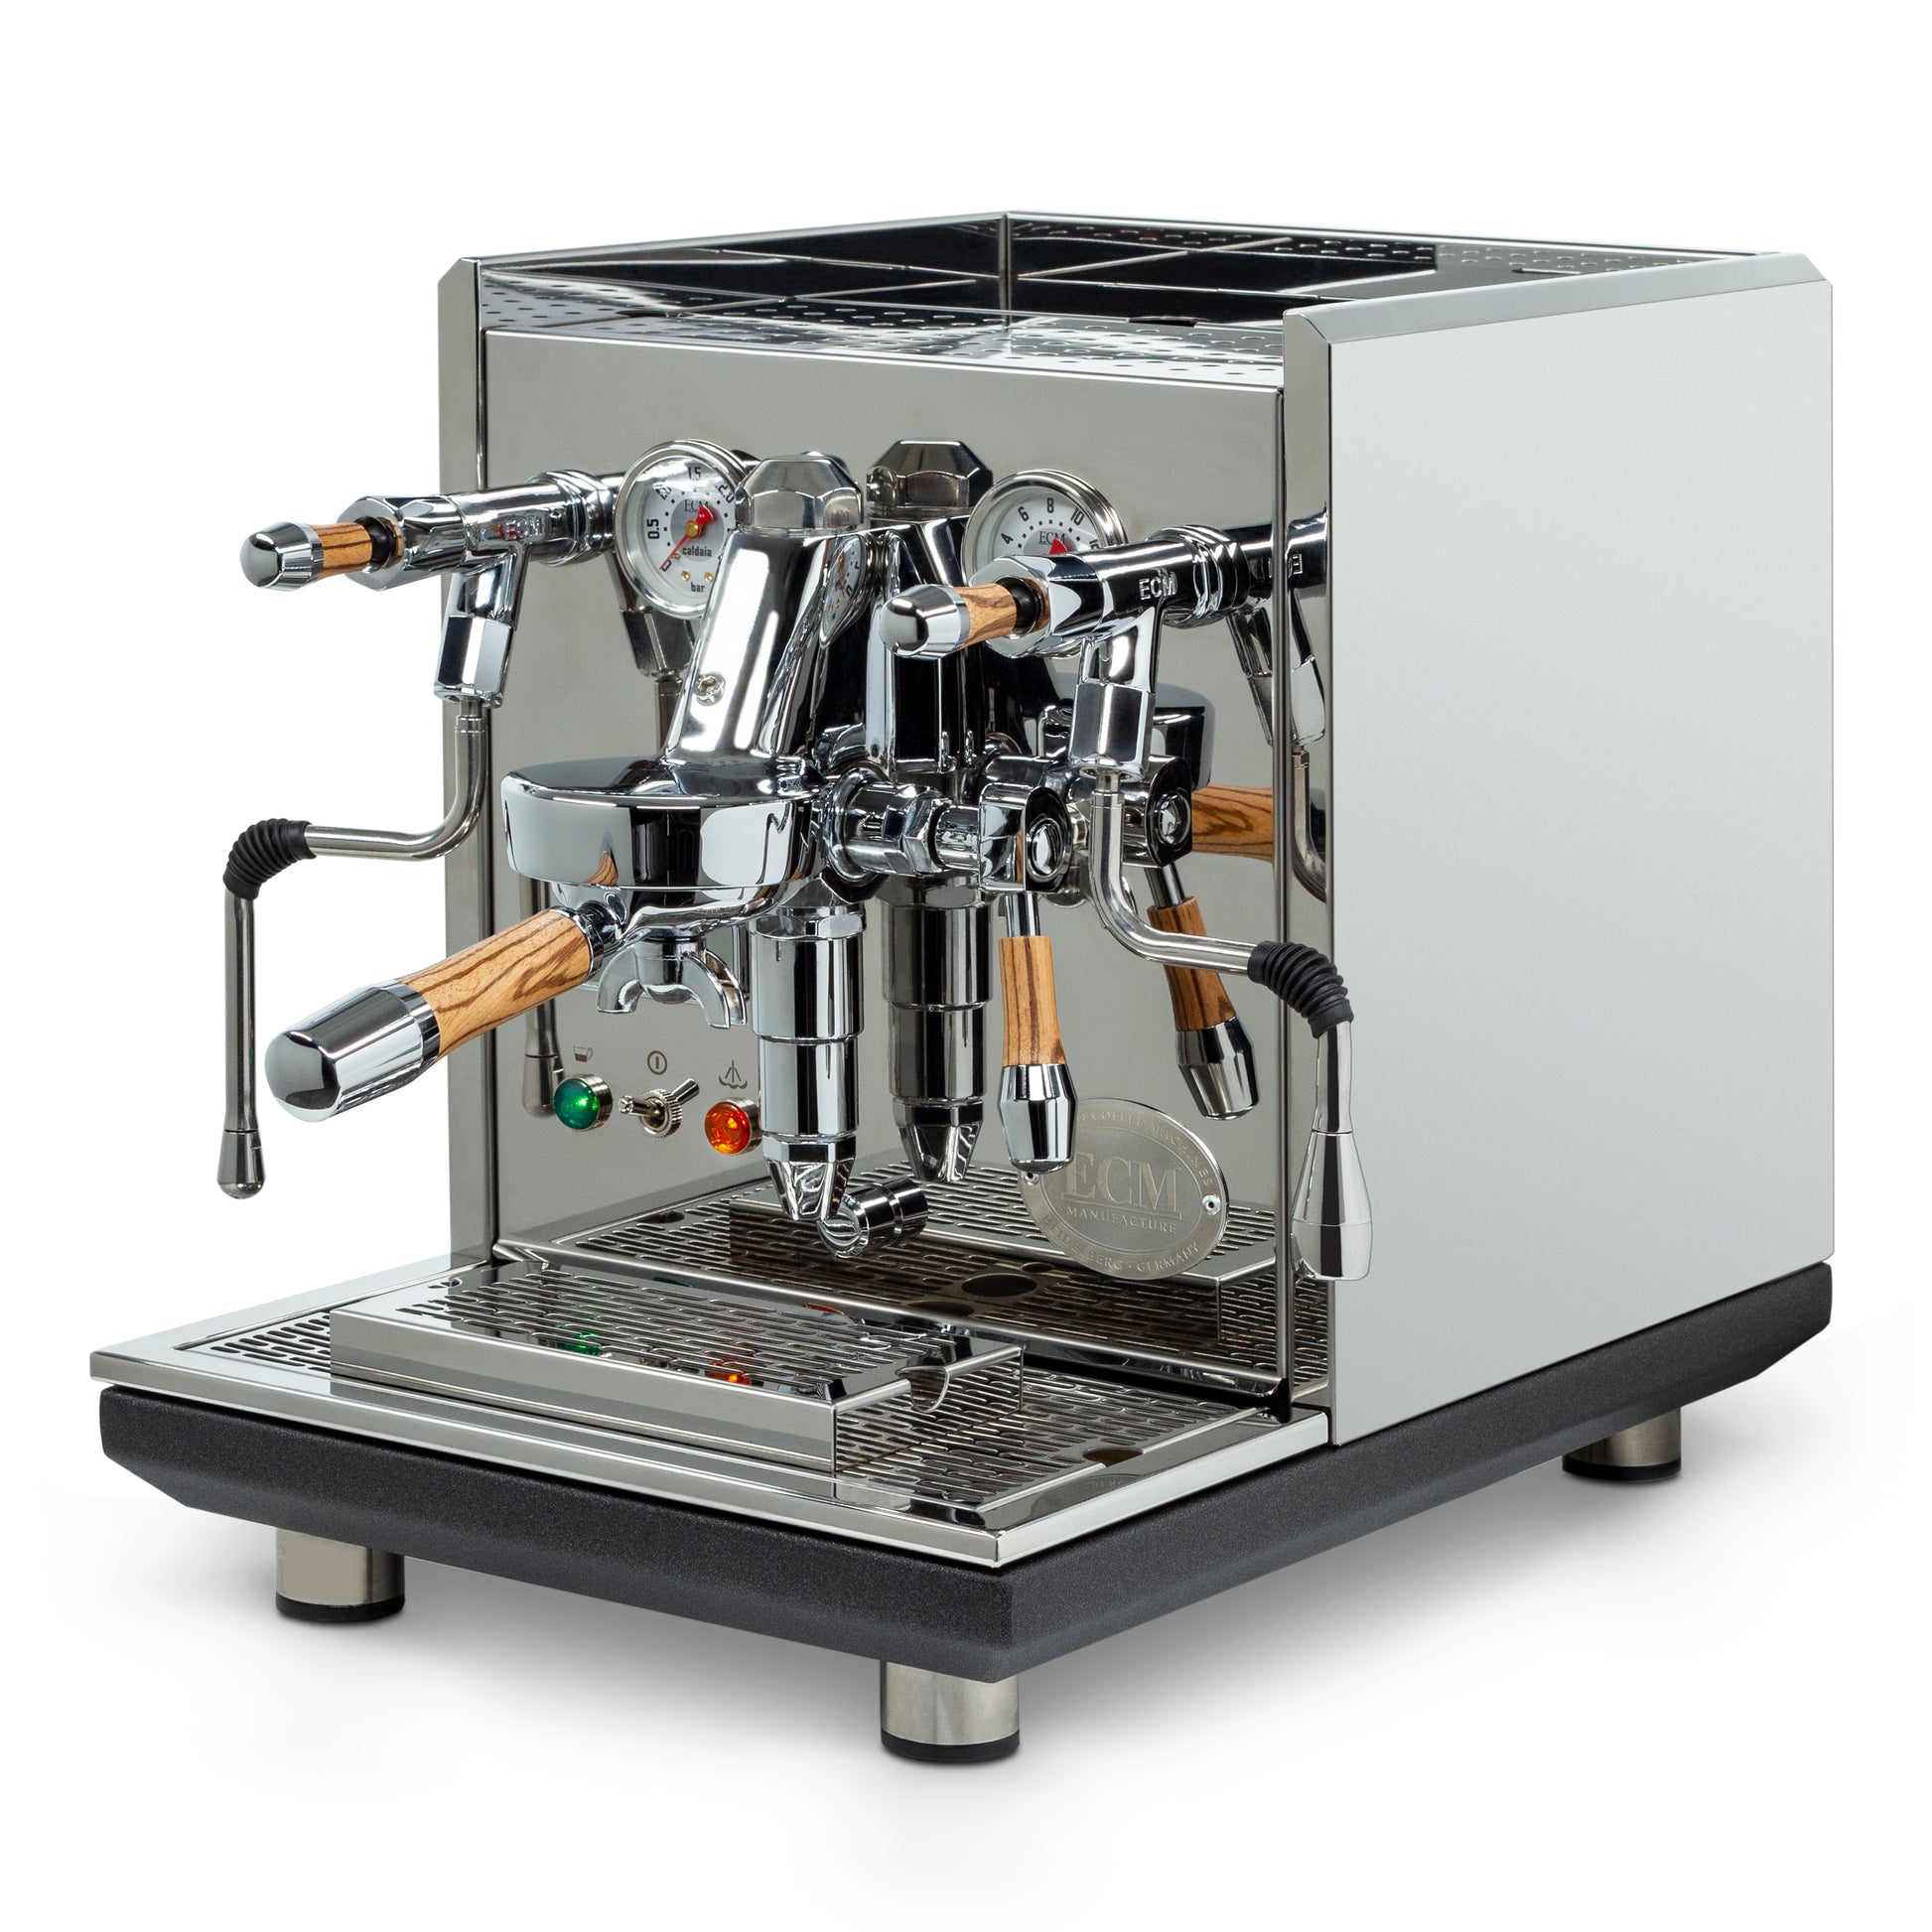 Bella Pro Dual Brew Single Serve Coffee Maker, Stainless Steel